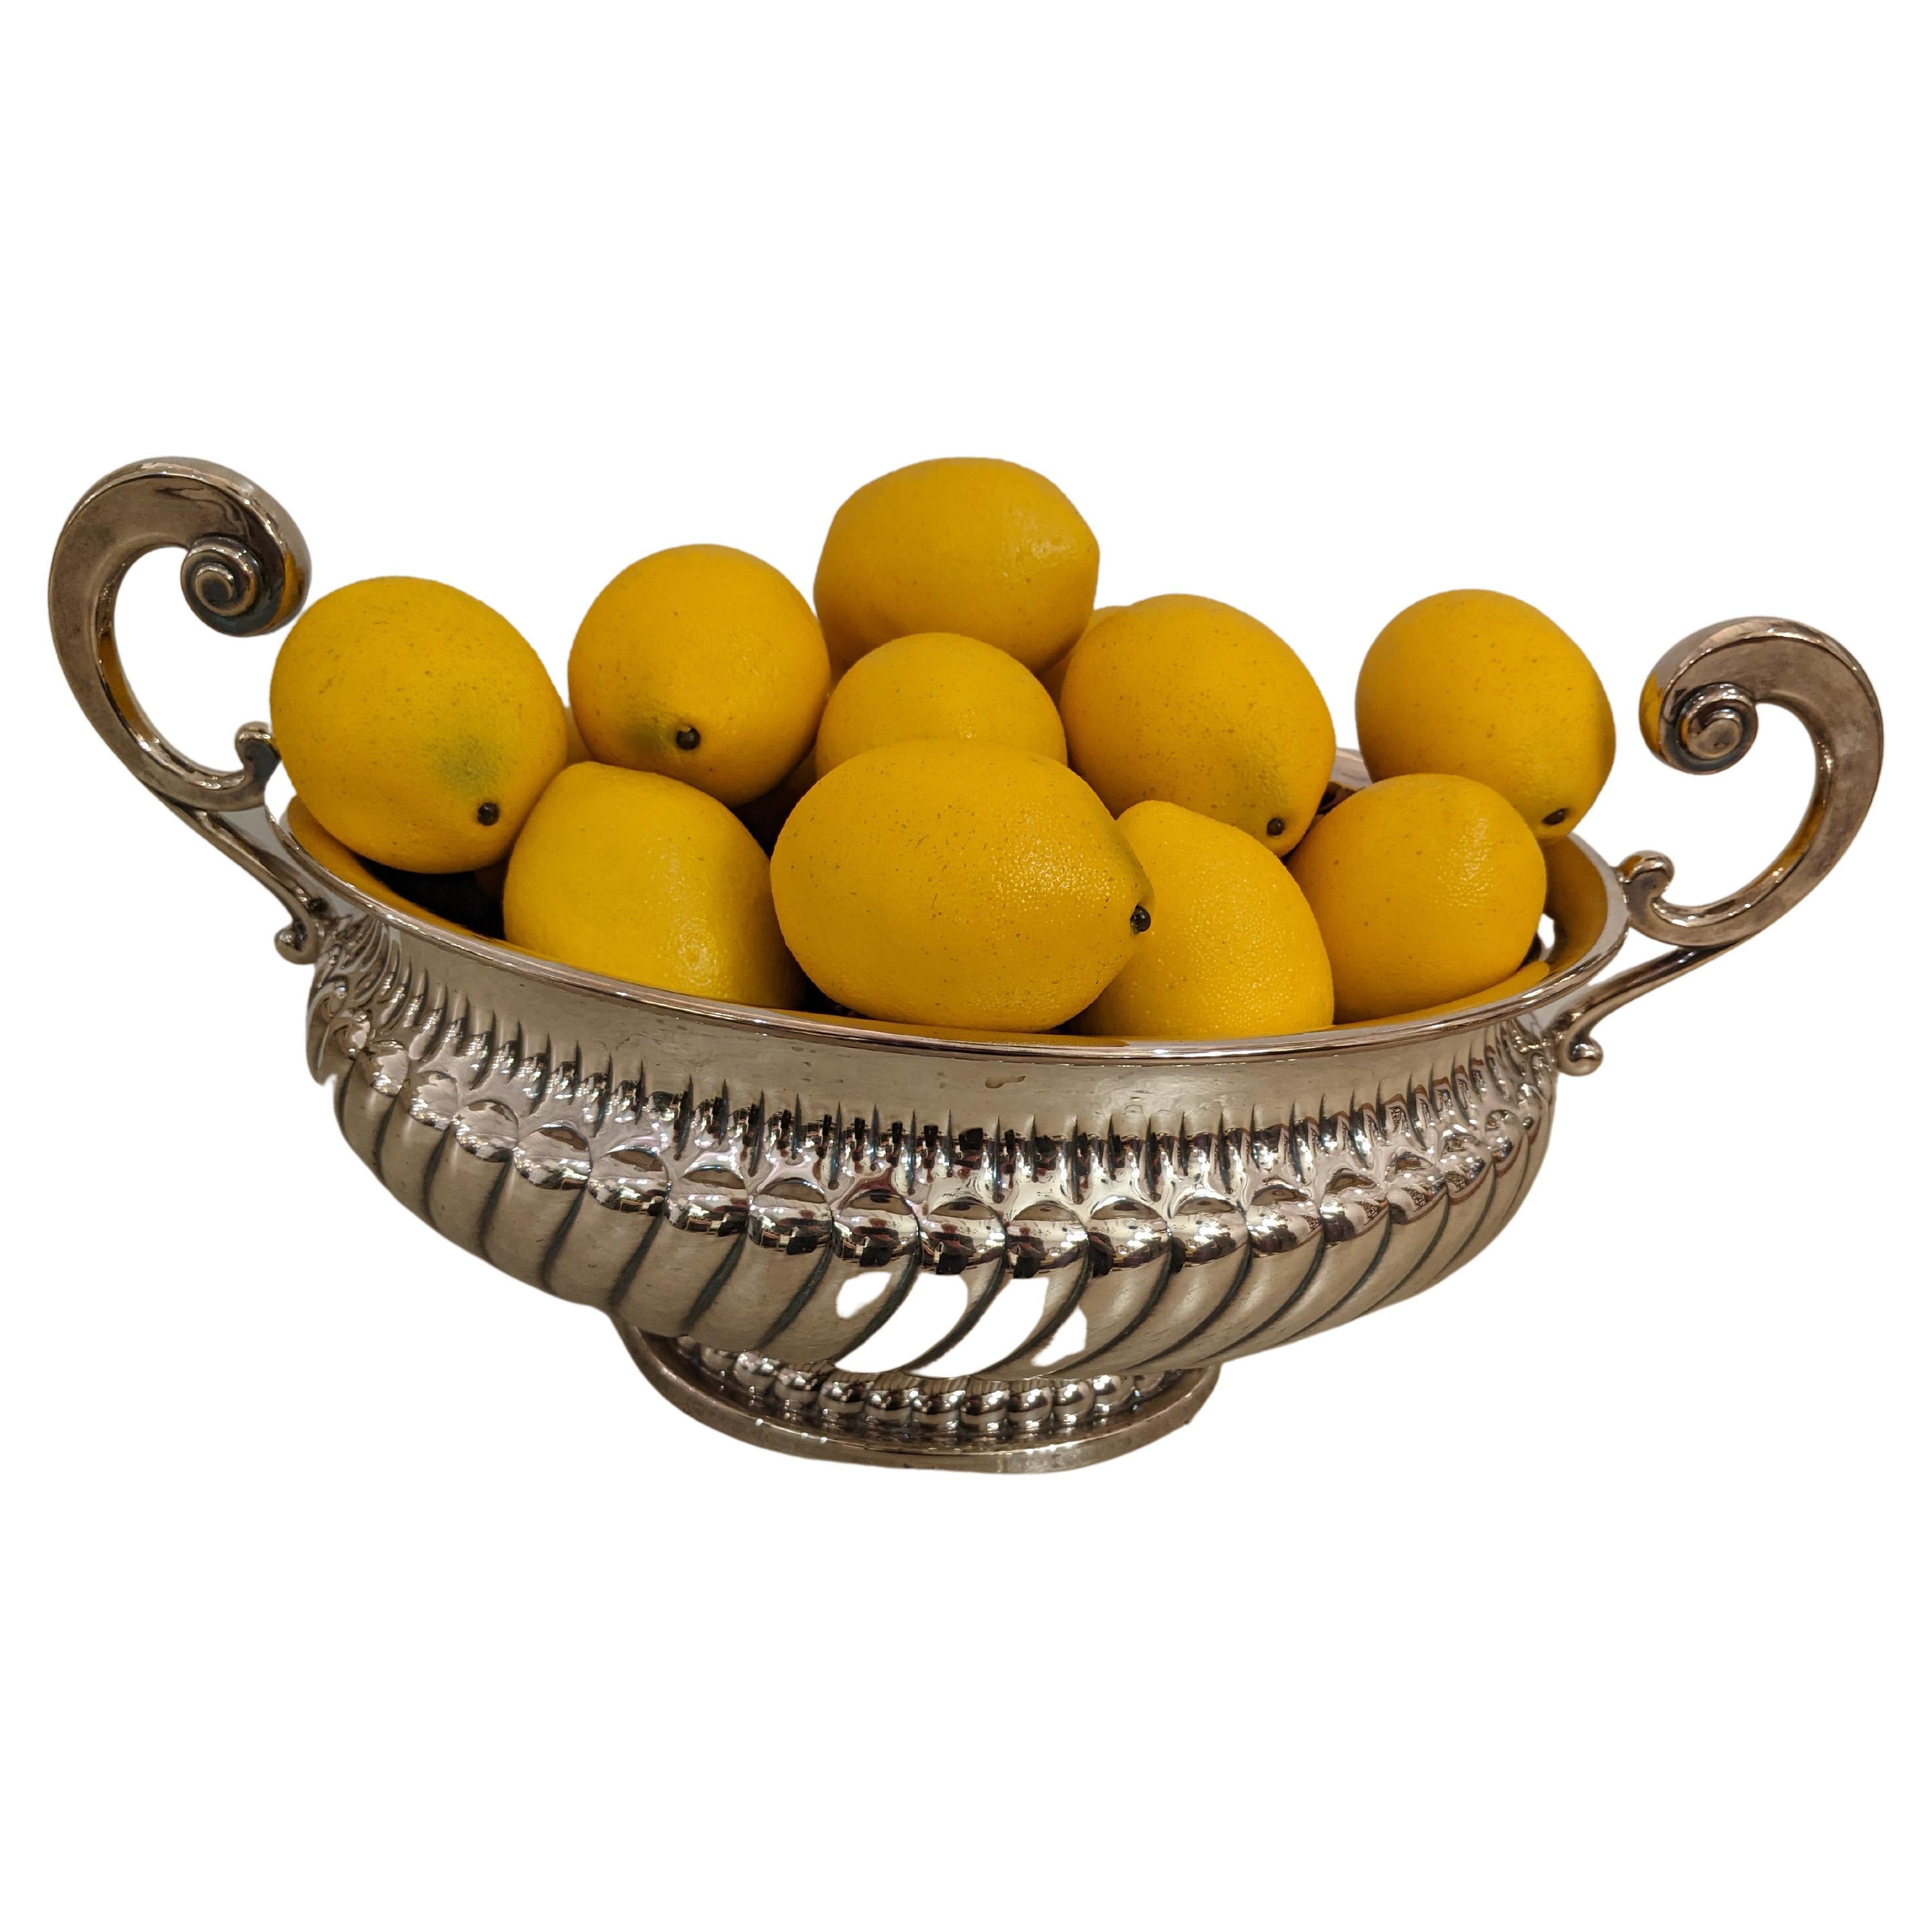 Elegant Glistening Silverplate Tureen with Lemons